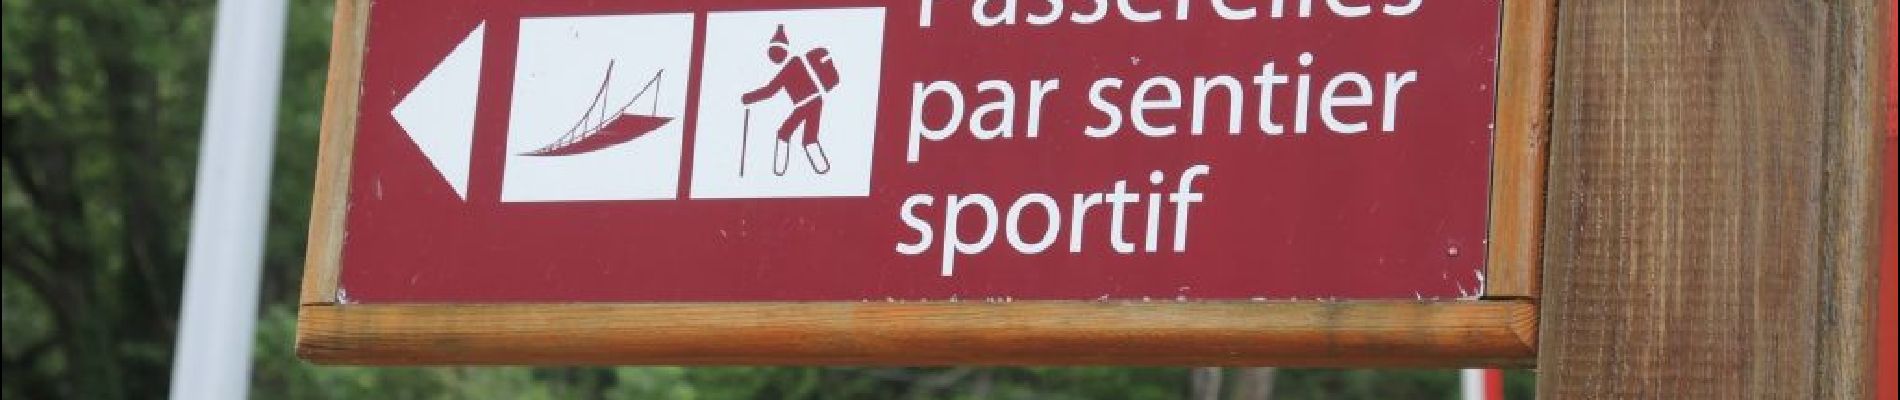 Trail Walking Treffort - PF-Treffort - Mayres-Savel - Les Passerelles de Monteynard - Photo